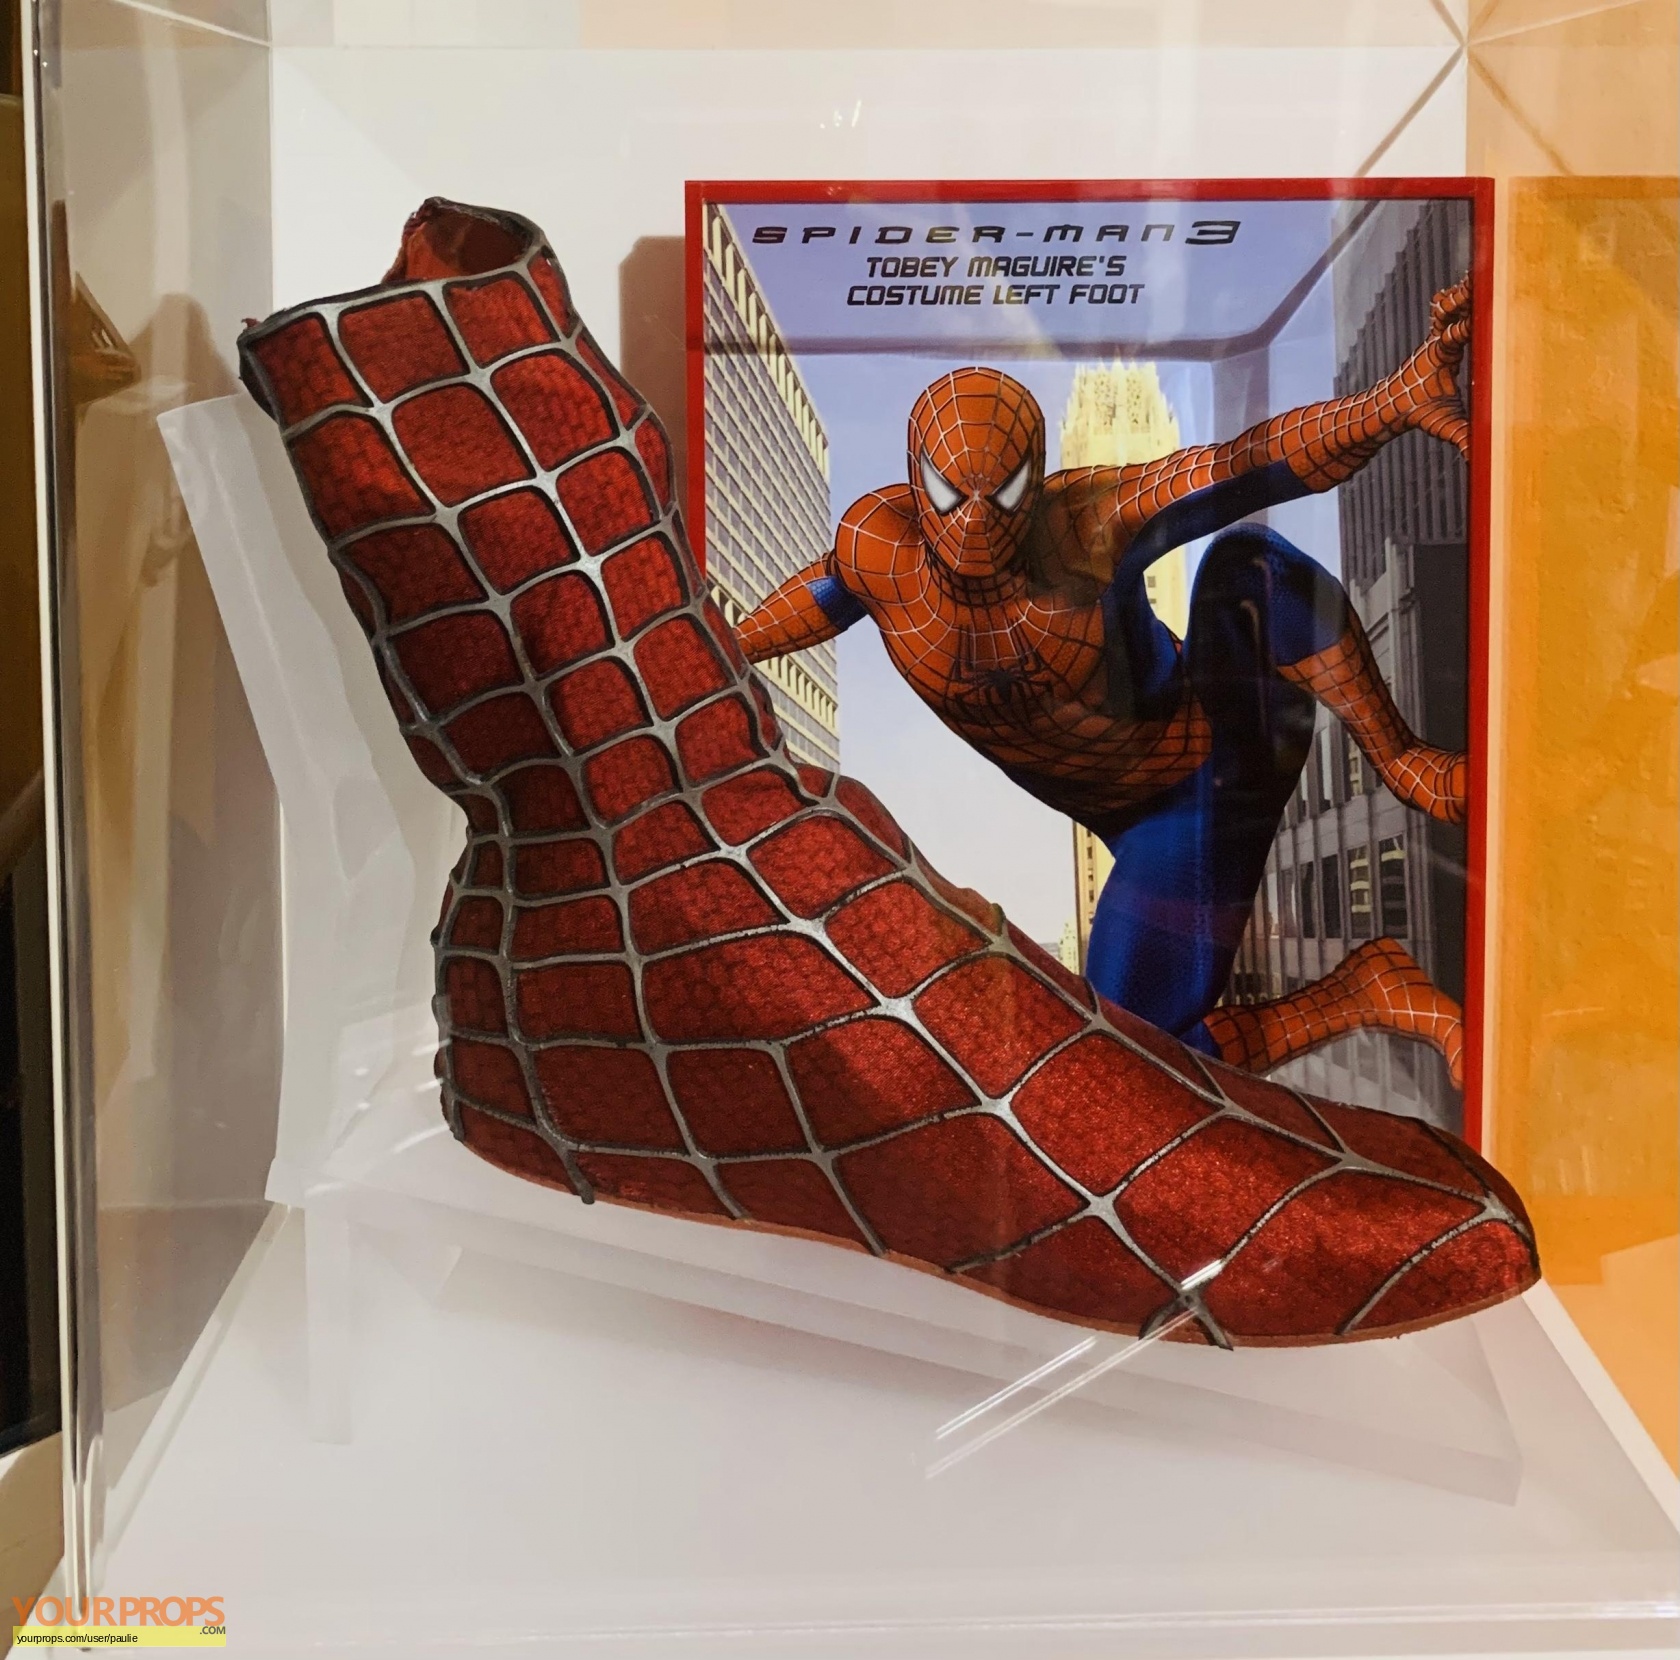 Spider-Man Spider-Man suit foot original movie costume